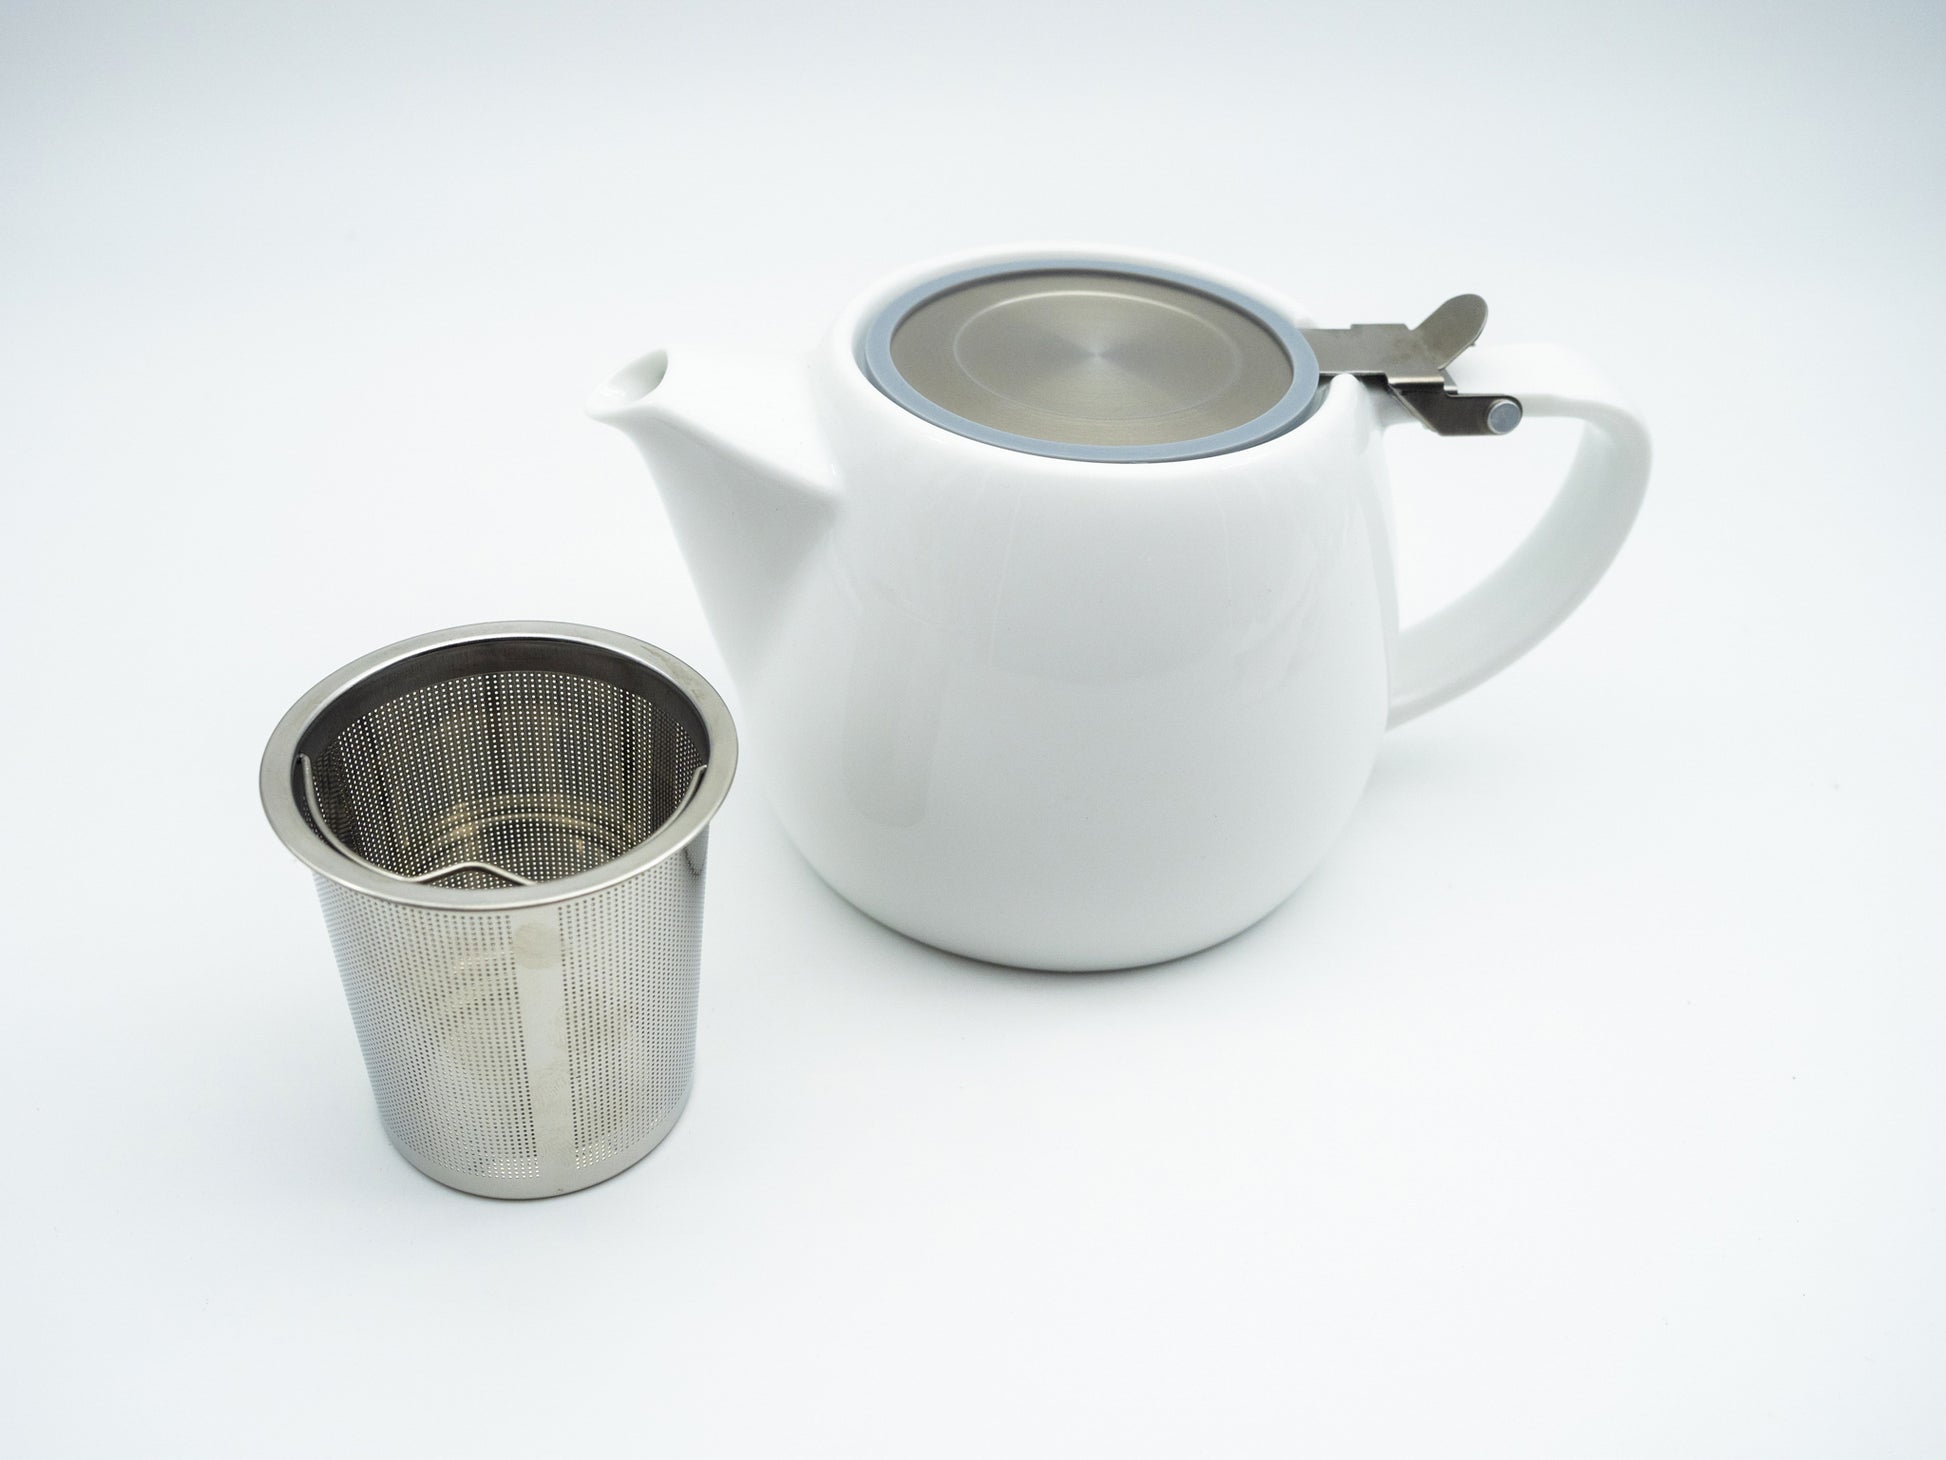 White porcelain stump tea pot next to a stainless steel infuser basket